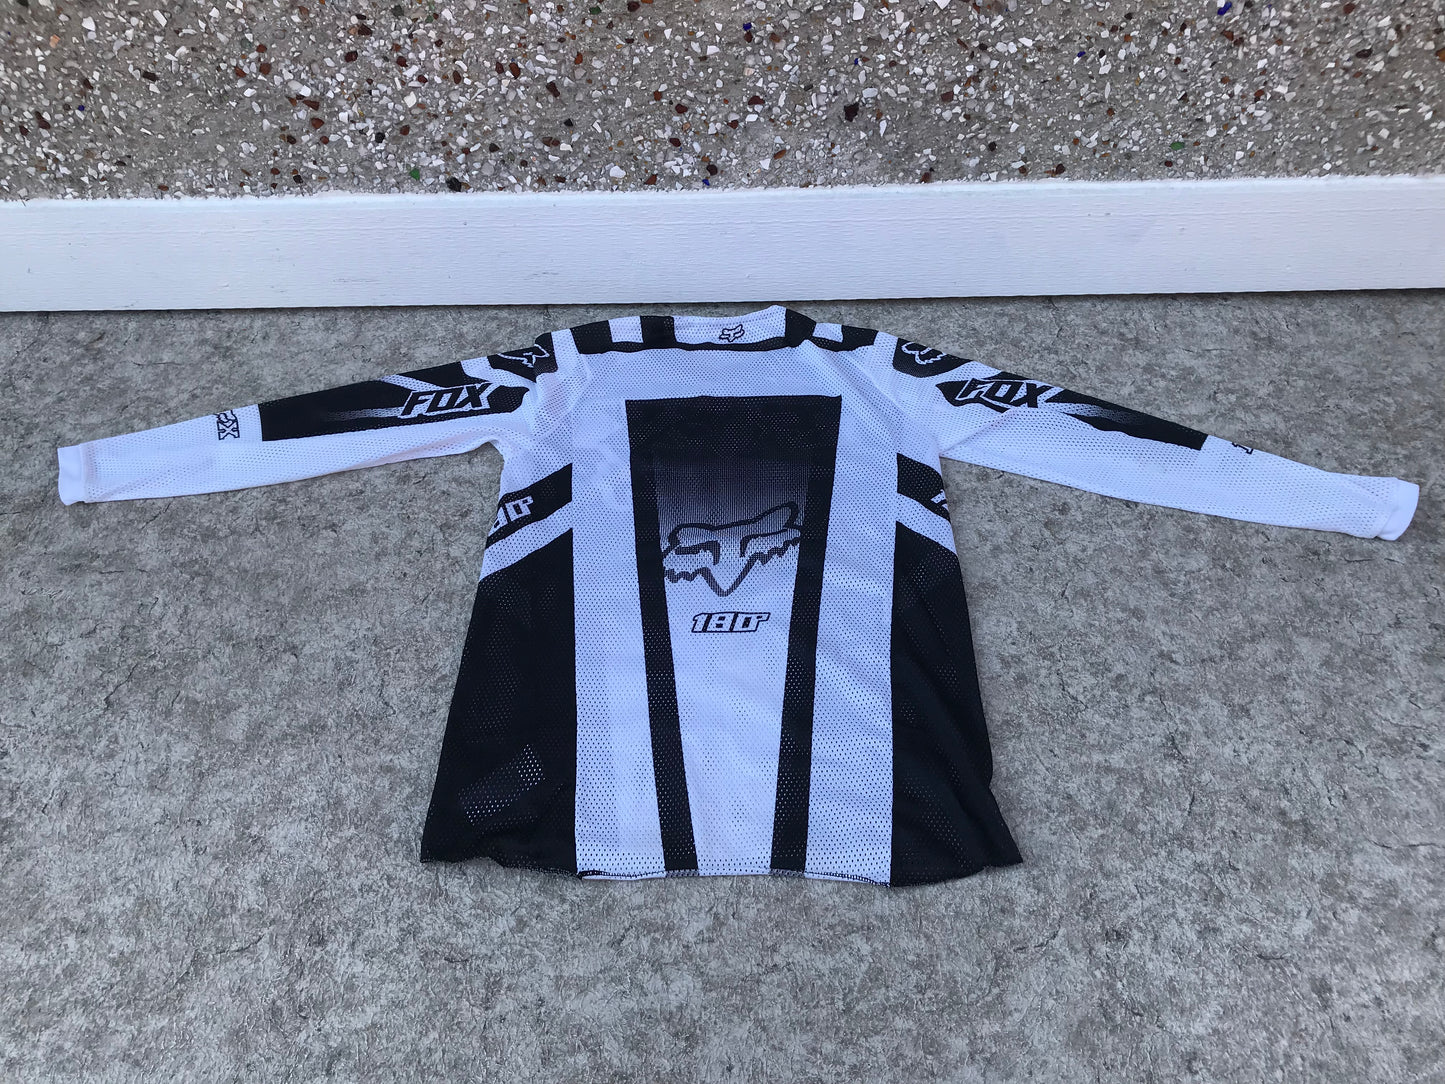 Motocross BMX Dirt Bike Child Size Junior 14 Fox DirtPaw Jersey White Black As New PT 3440